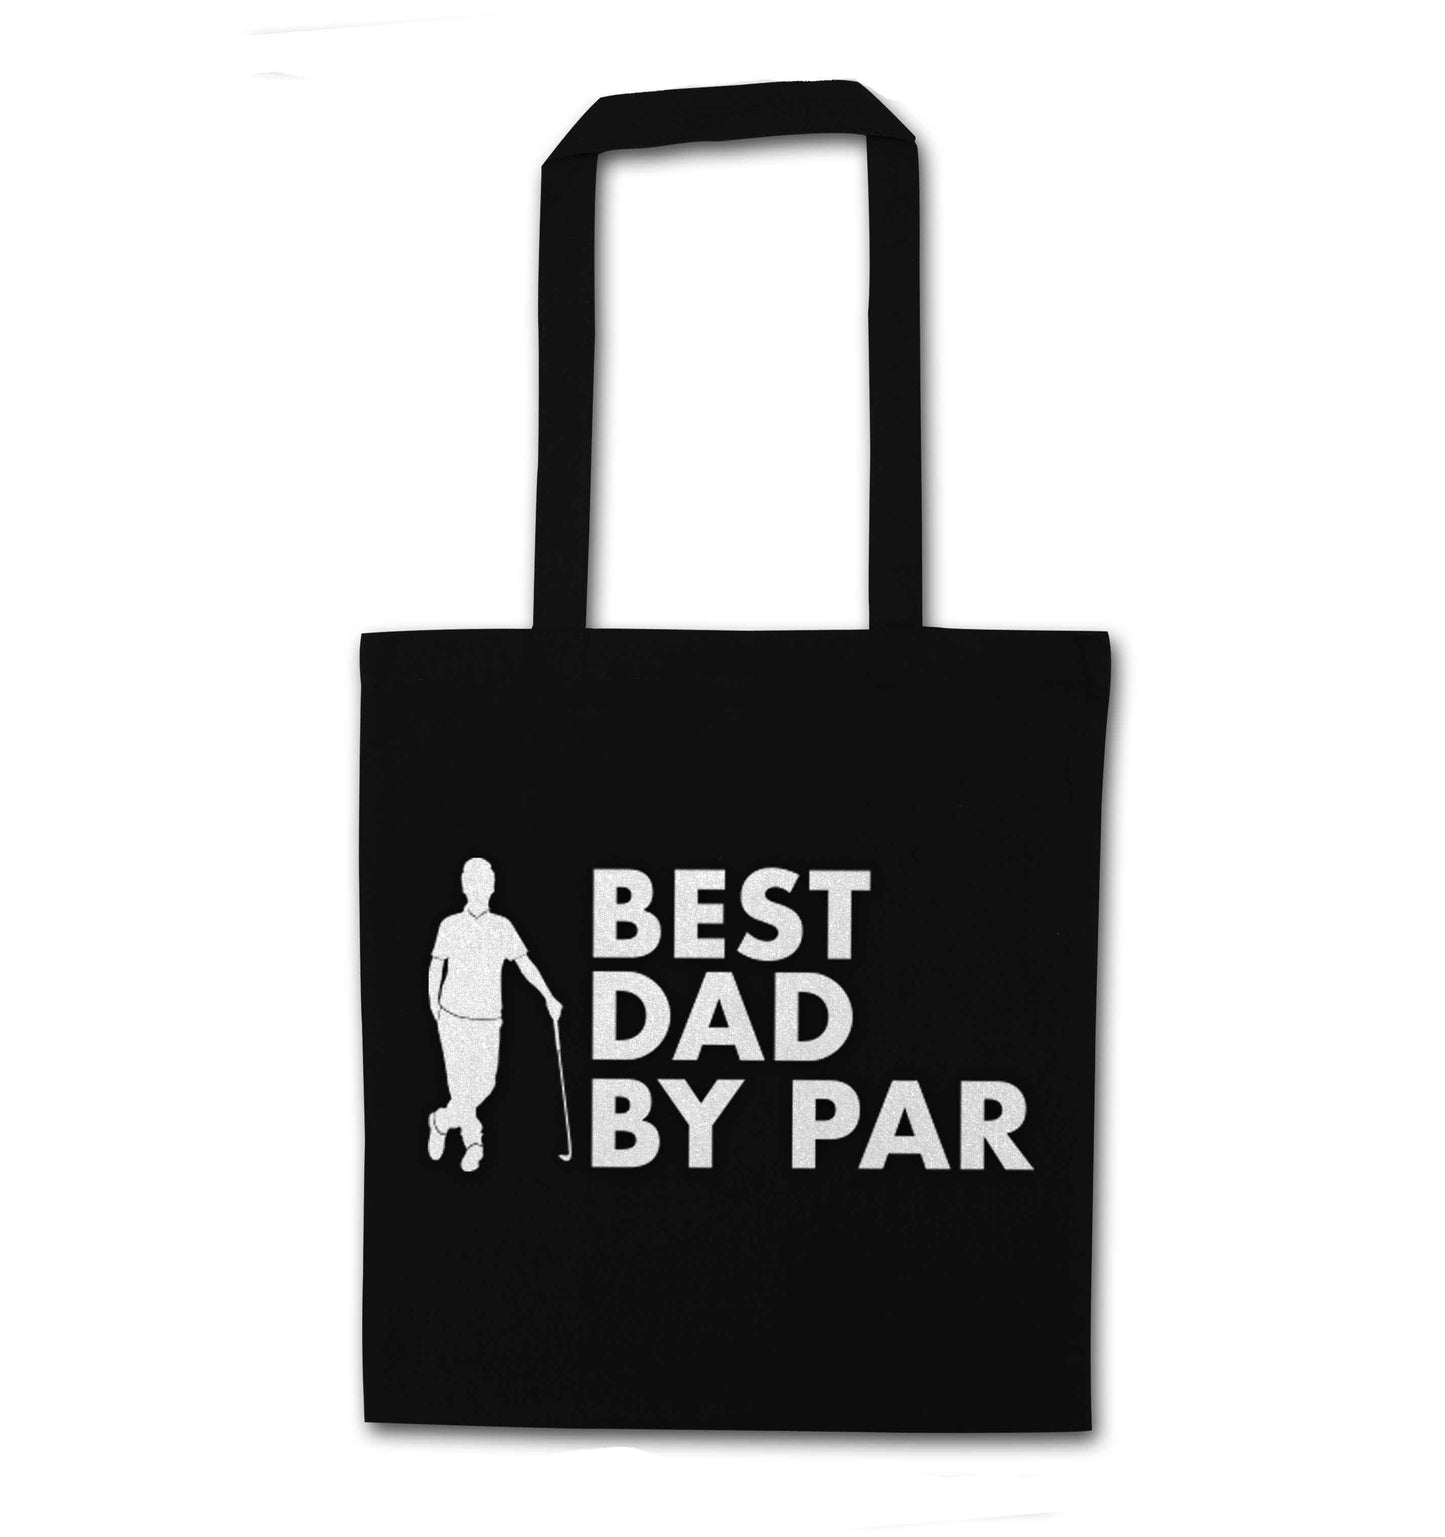 Best dad by par black tote bag